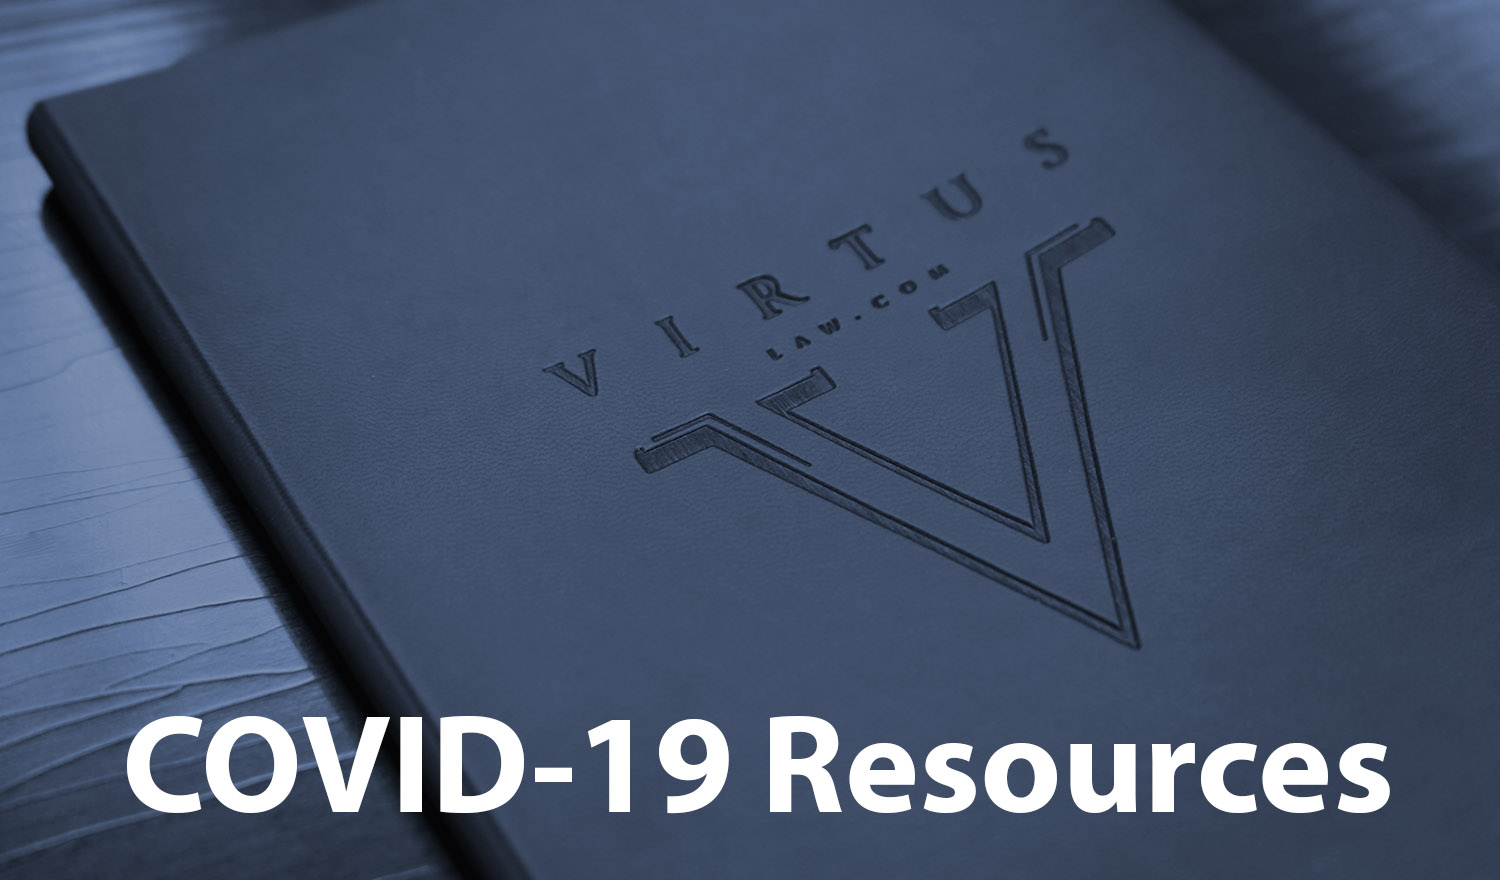 COVID-19 Resources at Virtus Law